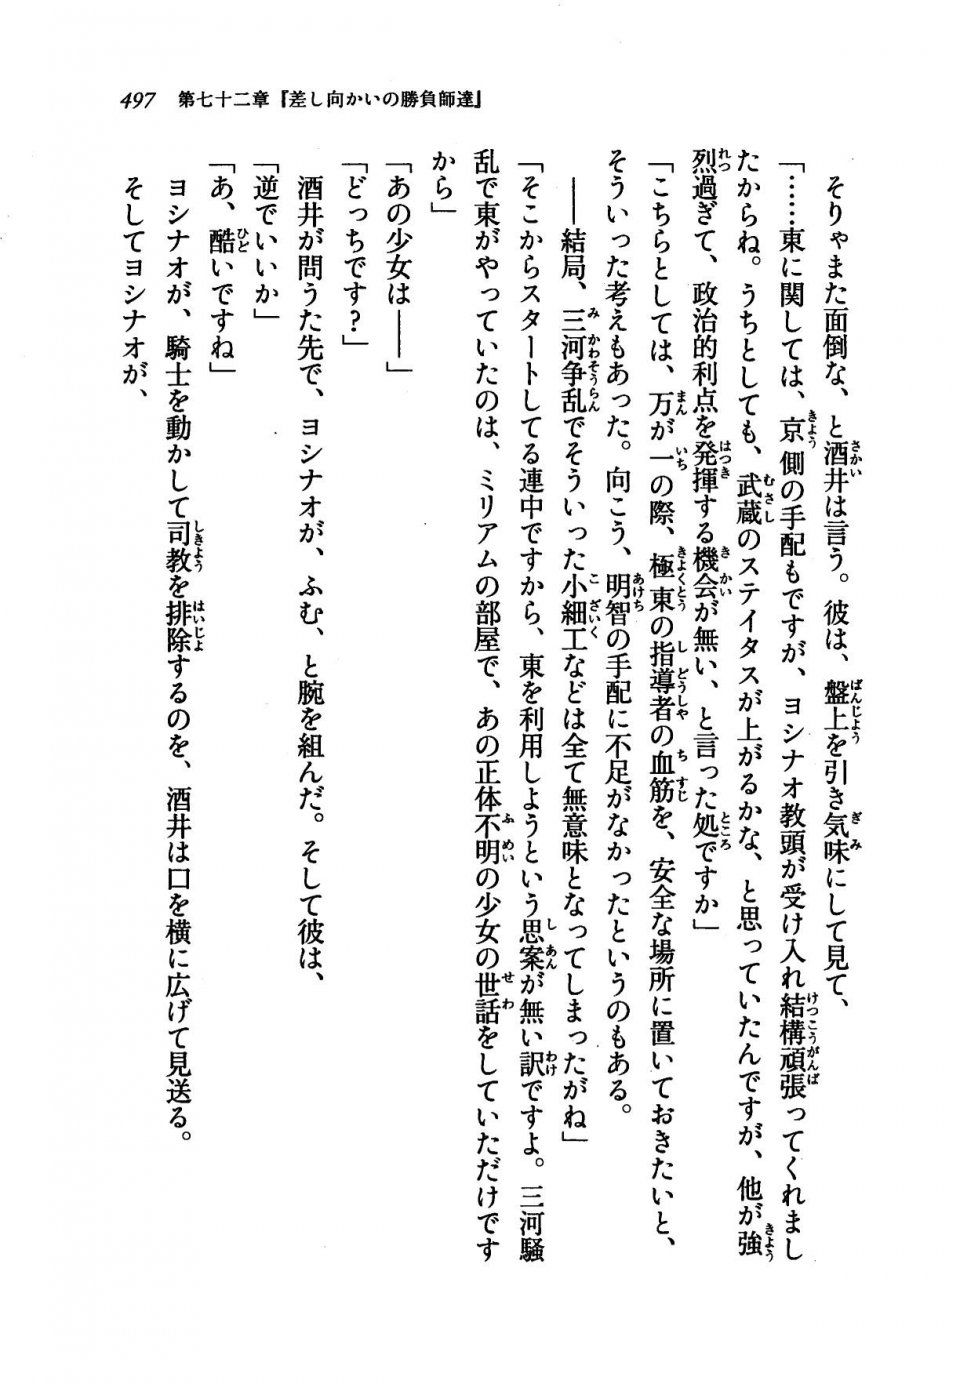 Kyoukai Senjou no Horizon LN Vol 21(8C) Part 1 - Photo #496